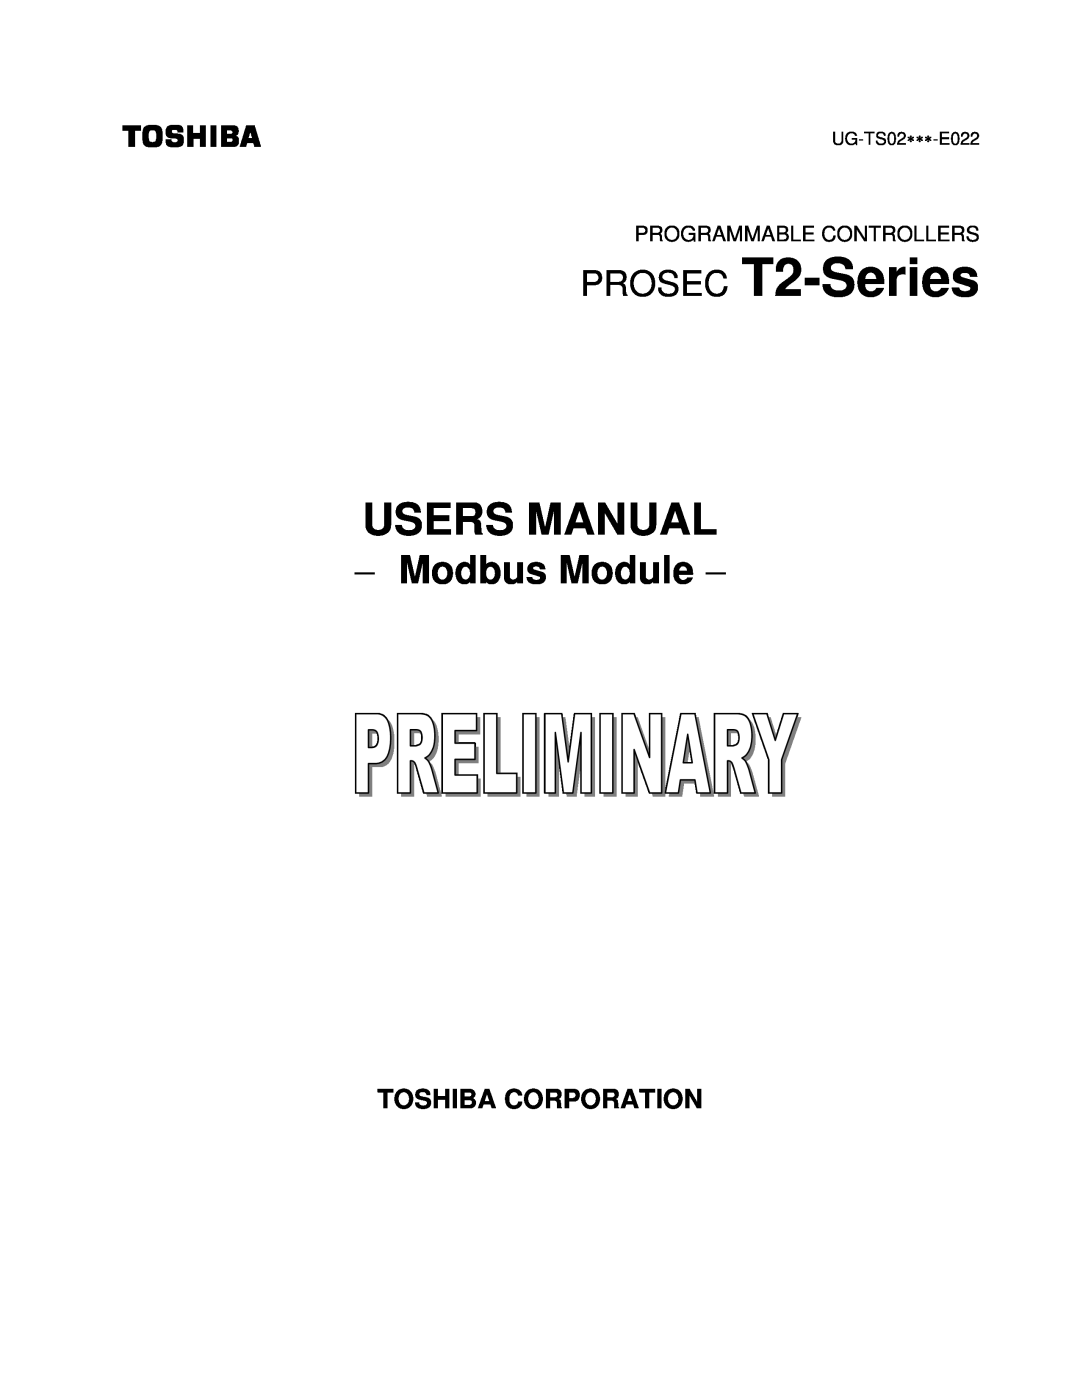 Toshiba T2 Series user manual Modbus Module, Toshiba Corporation, PROSEC T2-Series, Users Manual 